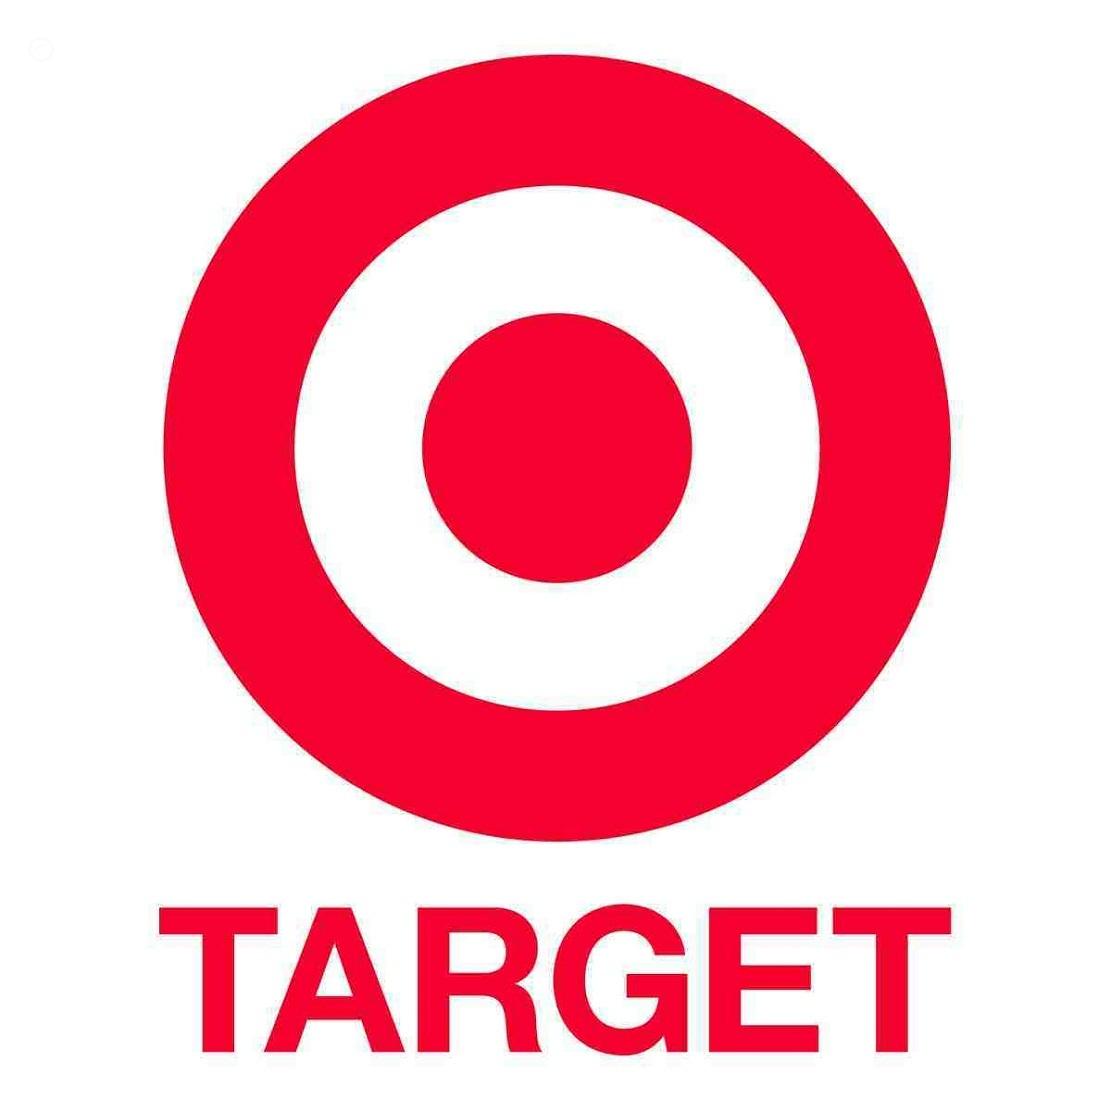 Target Store Logo Photo Background Wallpaper Image